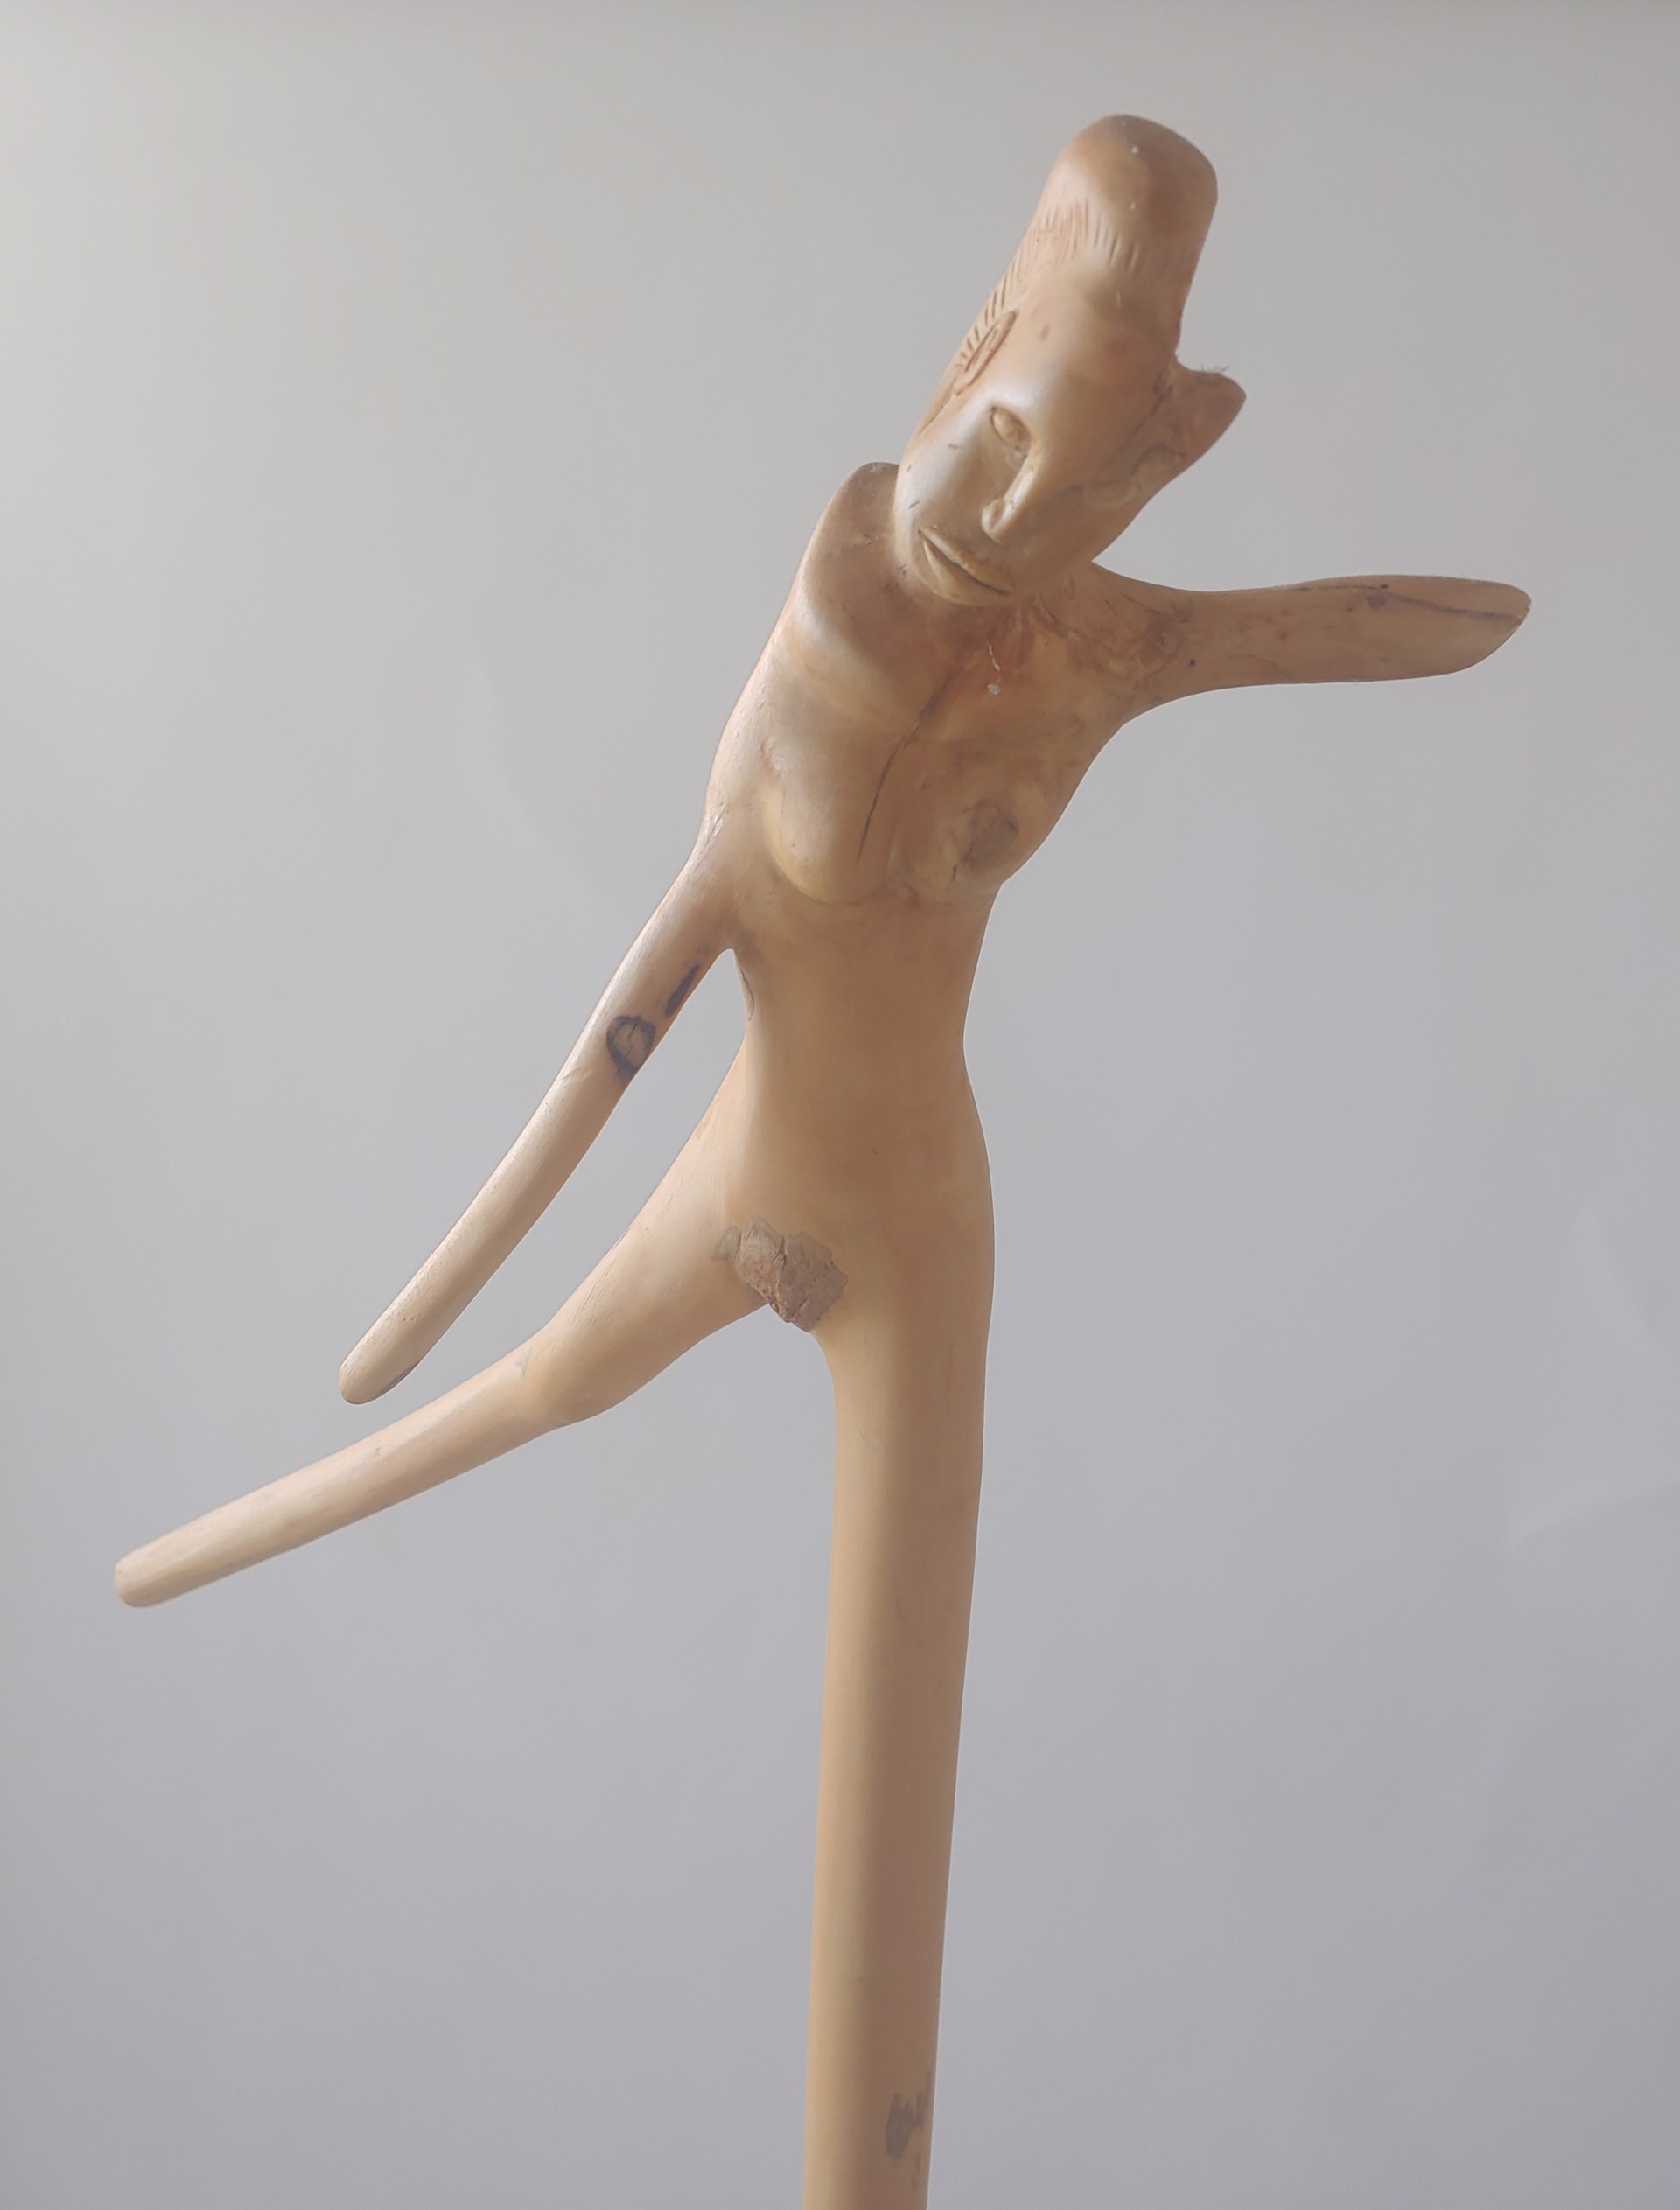 Anjelique Walking Stick on Rolling Base - Wood Sculpture by David Amdur